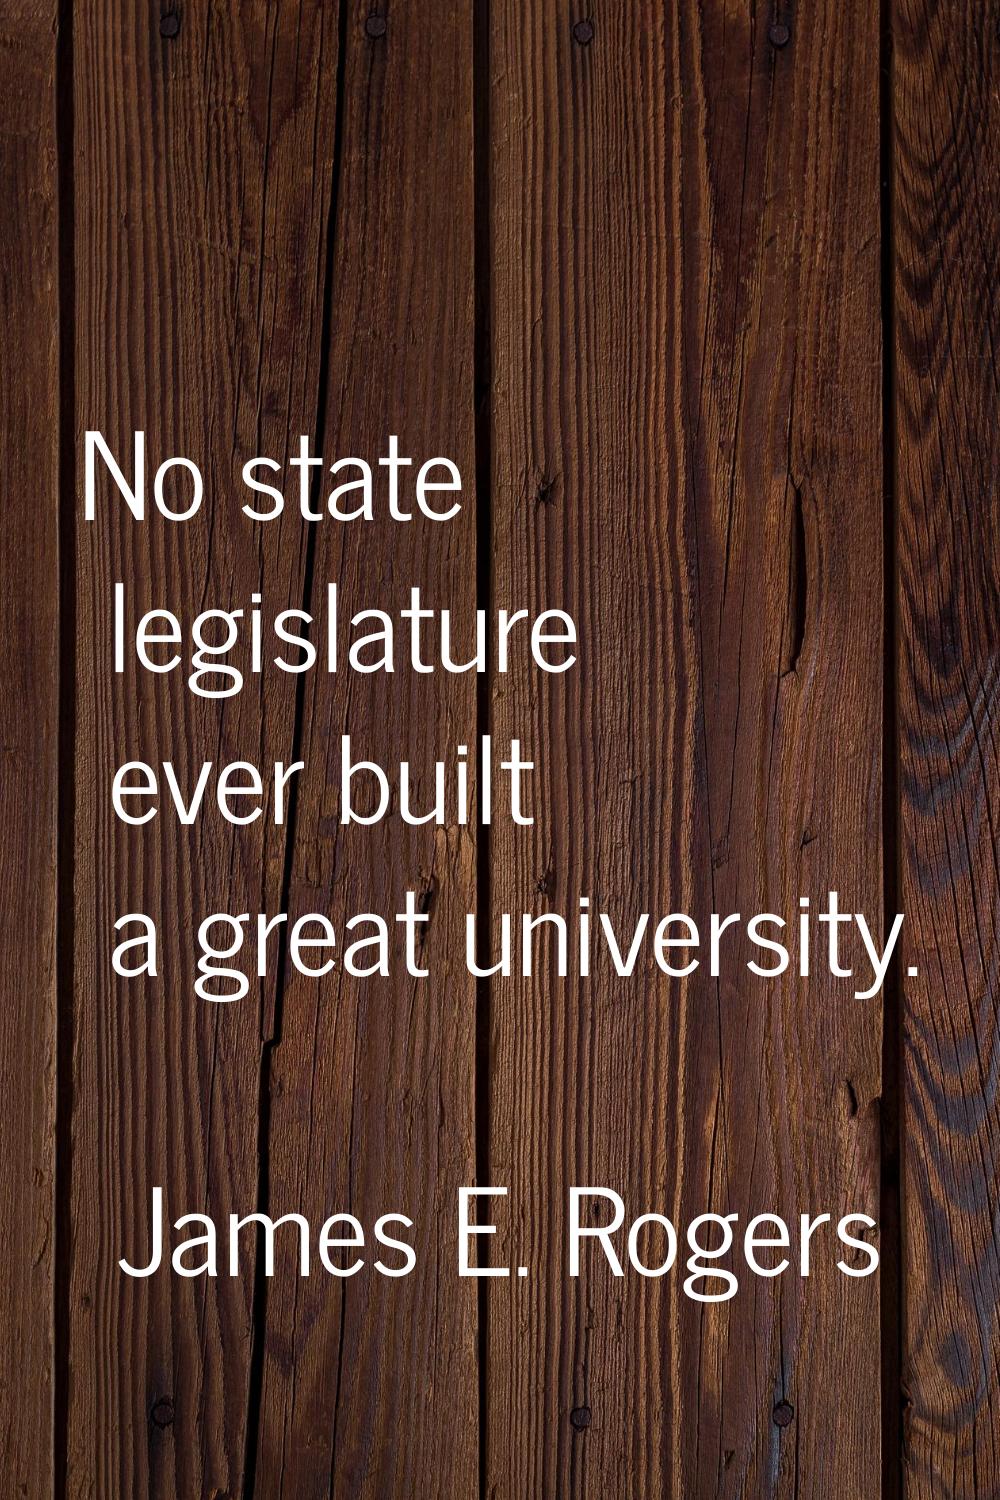 No state legislature ever built a great university.